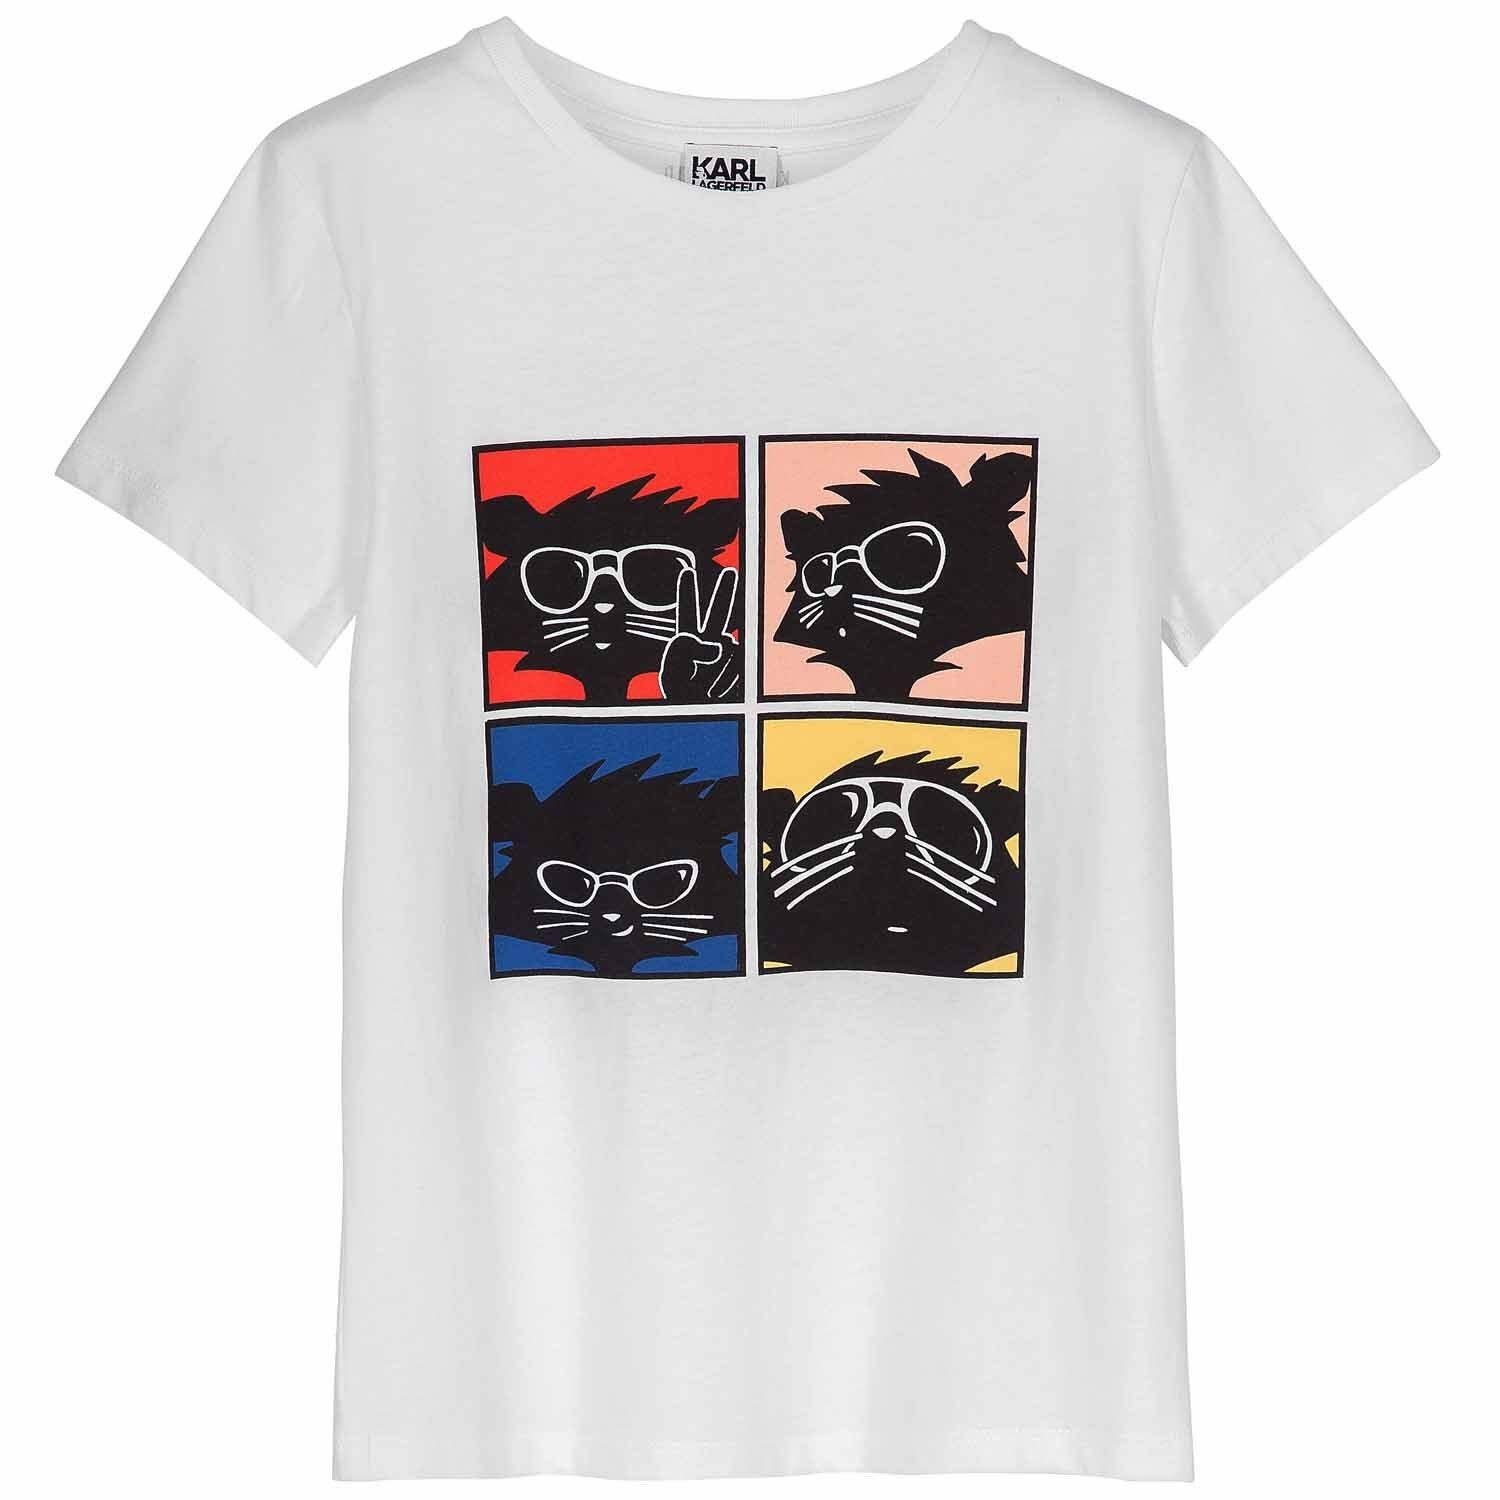 KARL LAGERFELD Print-Shirt KARL LAGERFELD Kids T-Shirt Chaupette